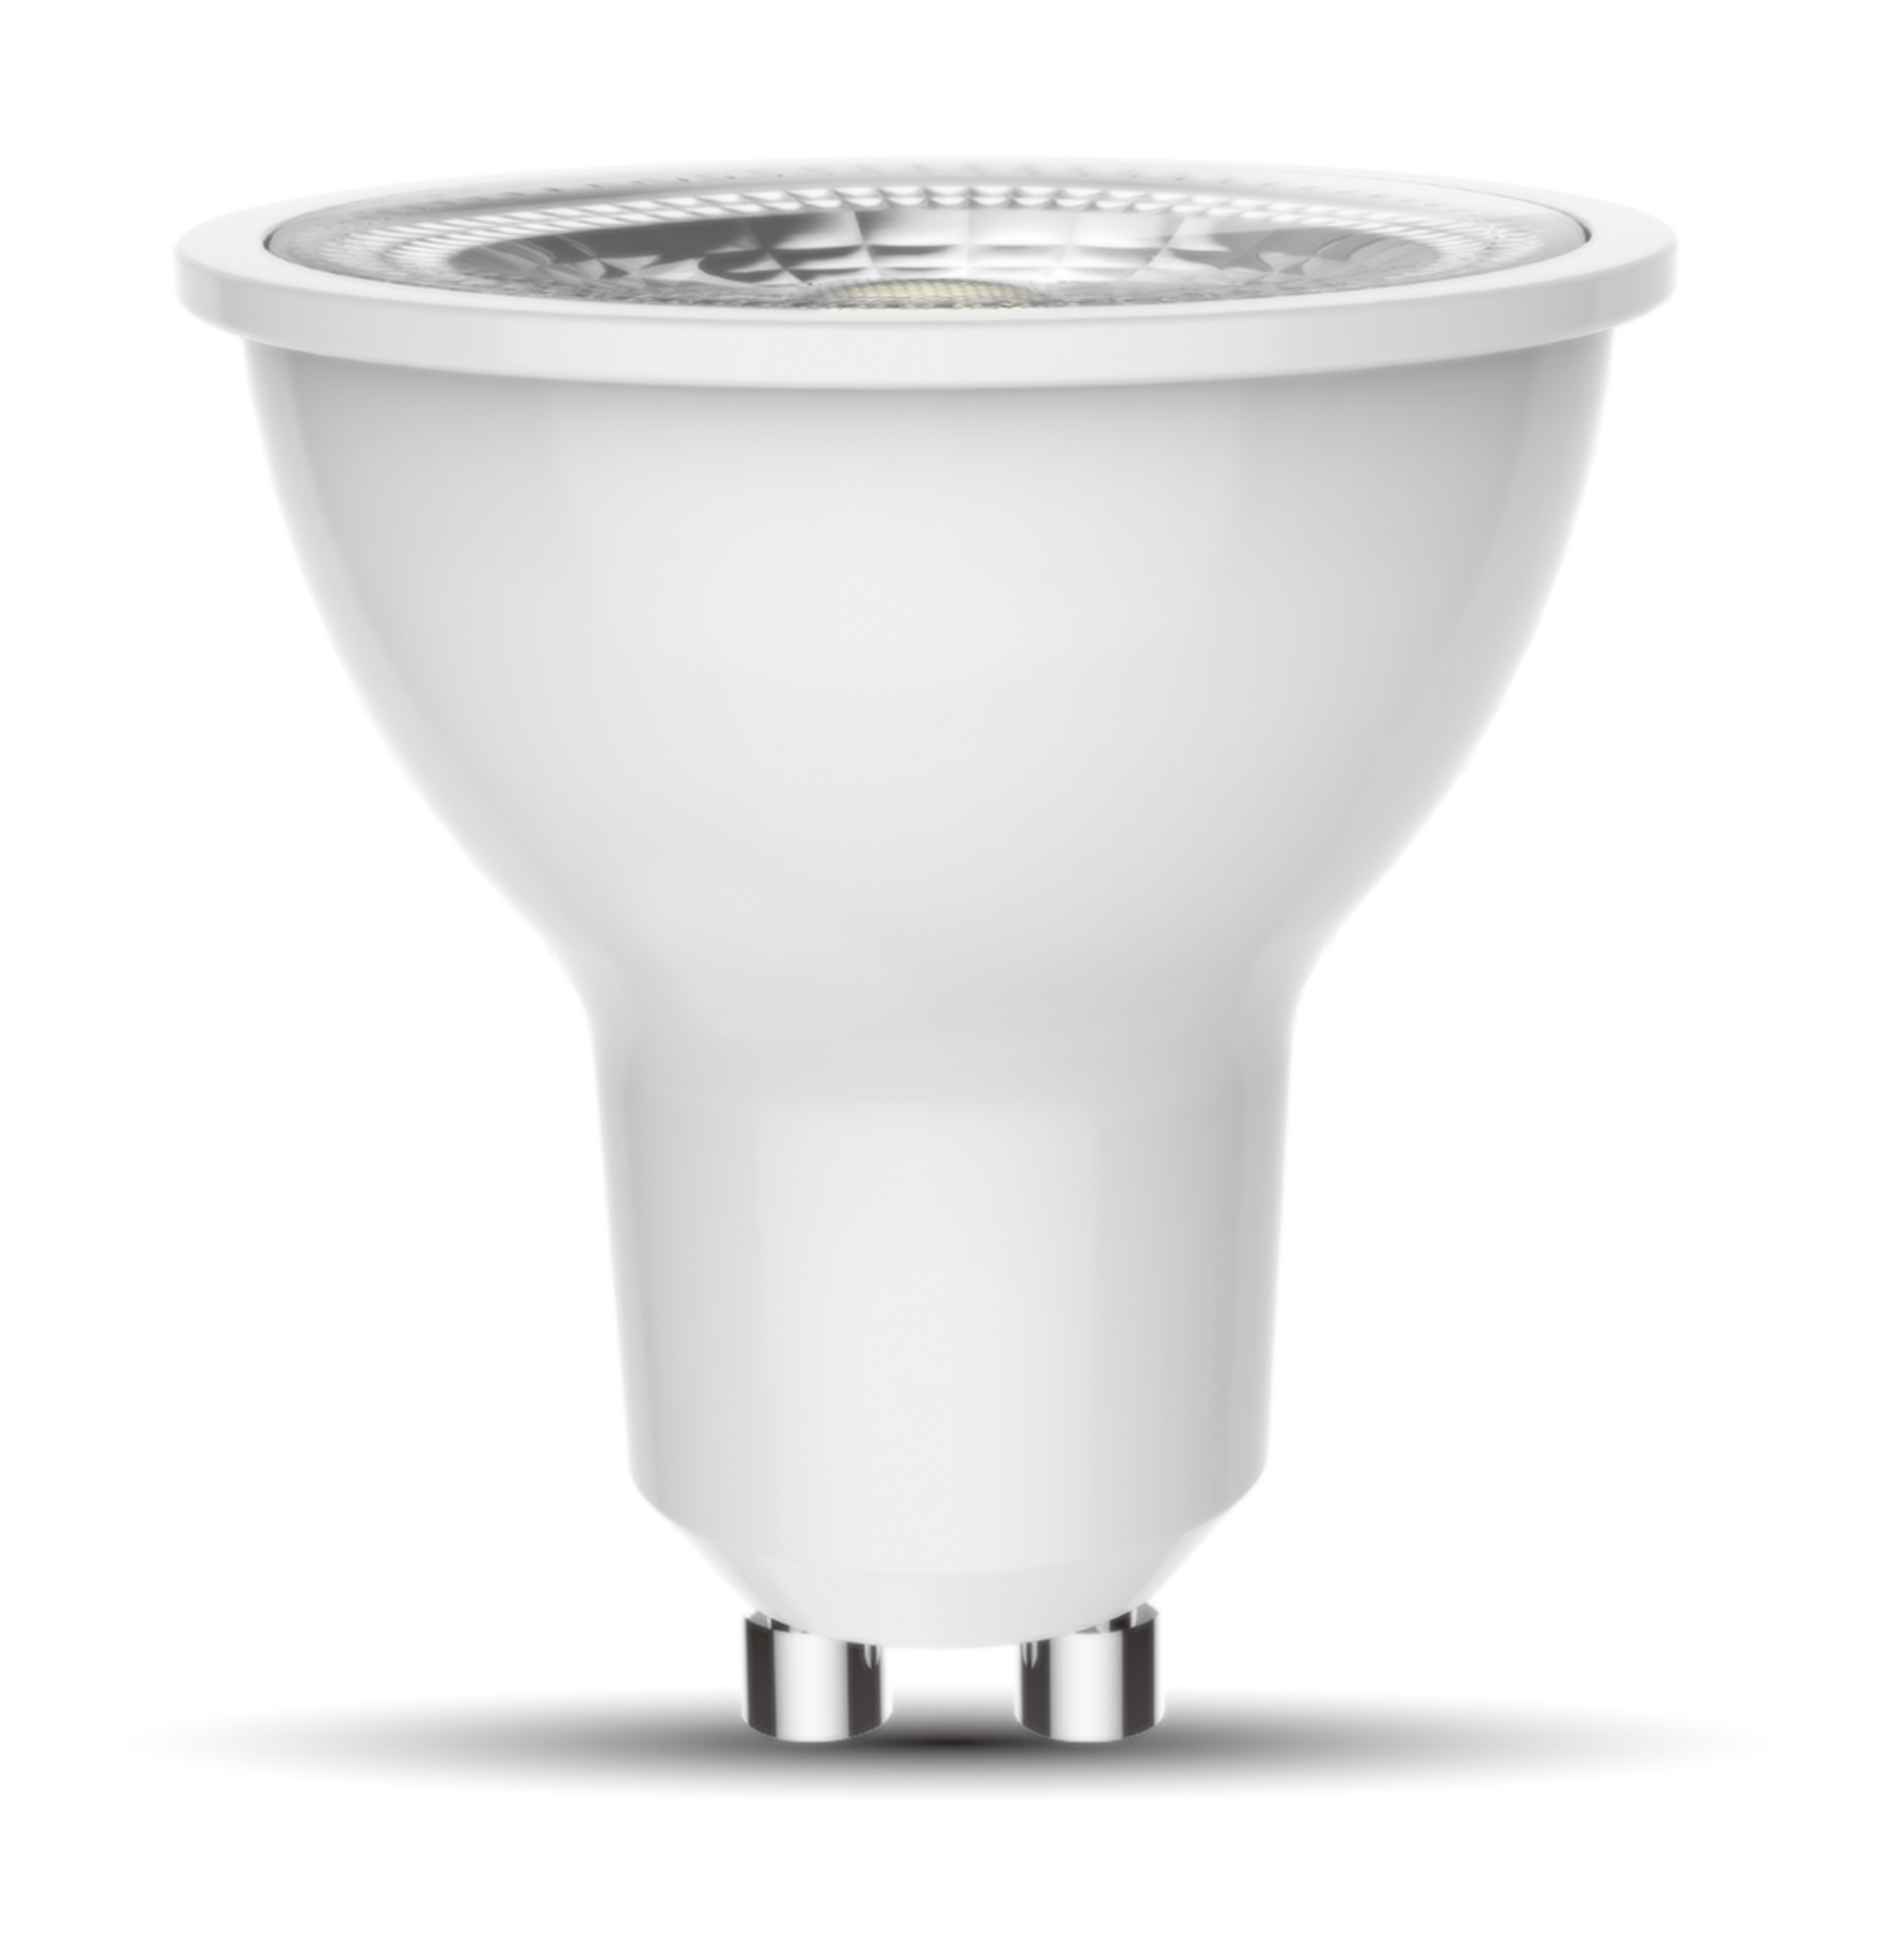 NF Value LED Lamps Luxram Spot Lamps